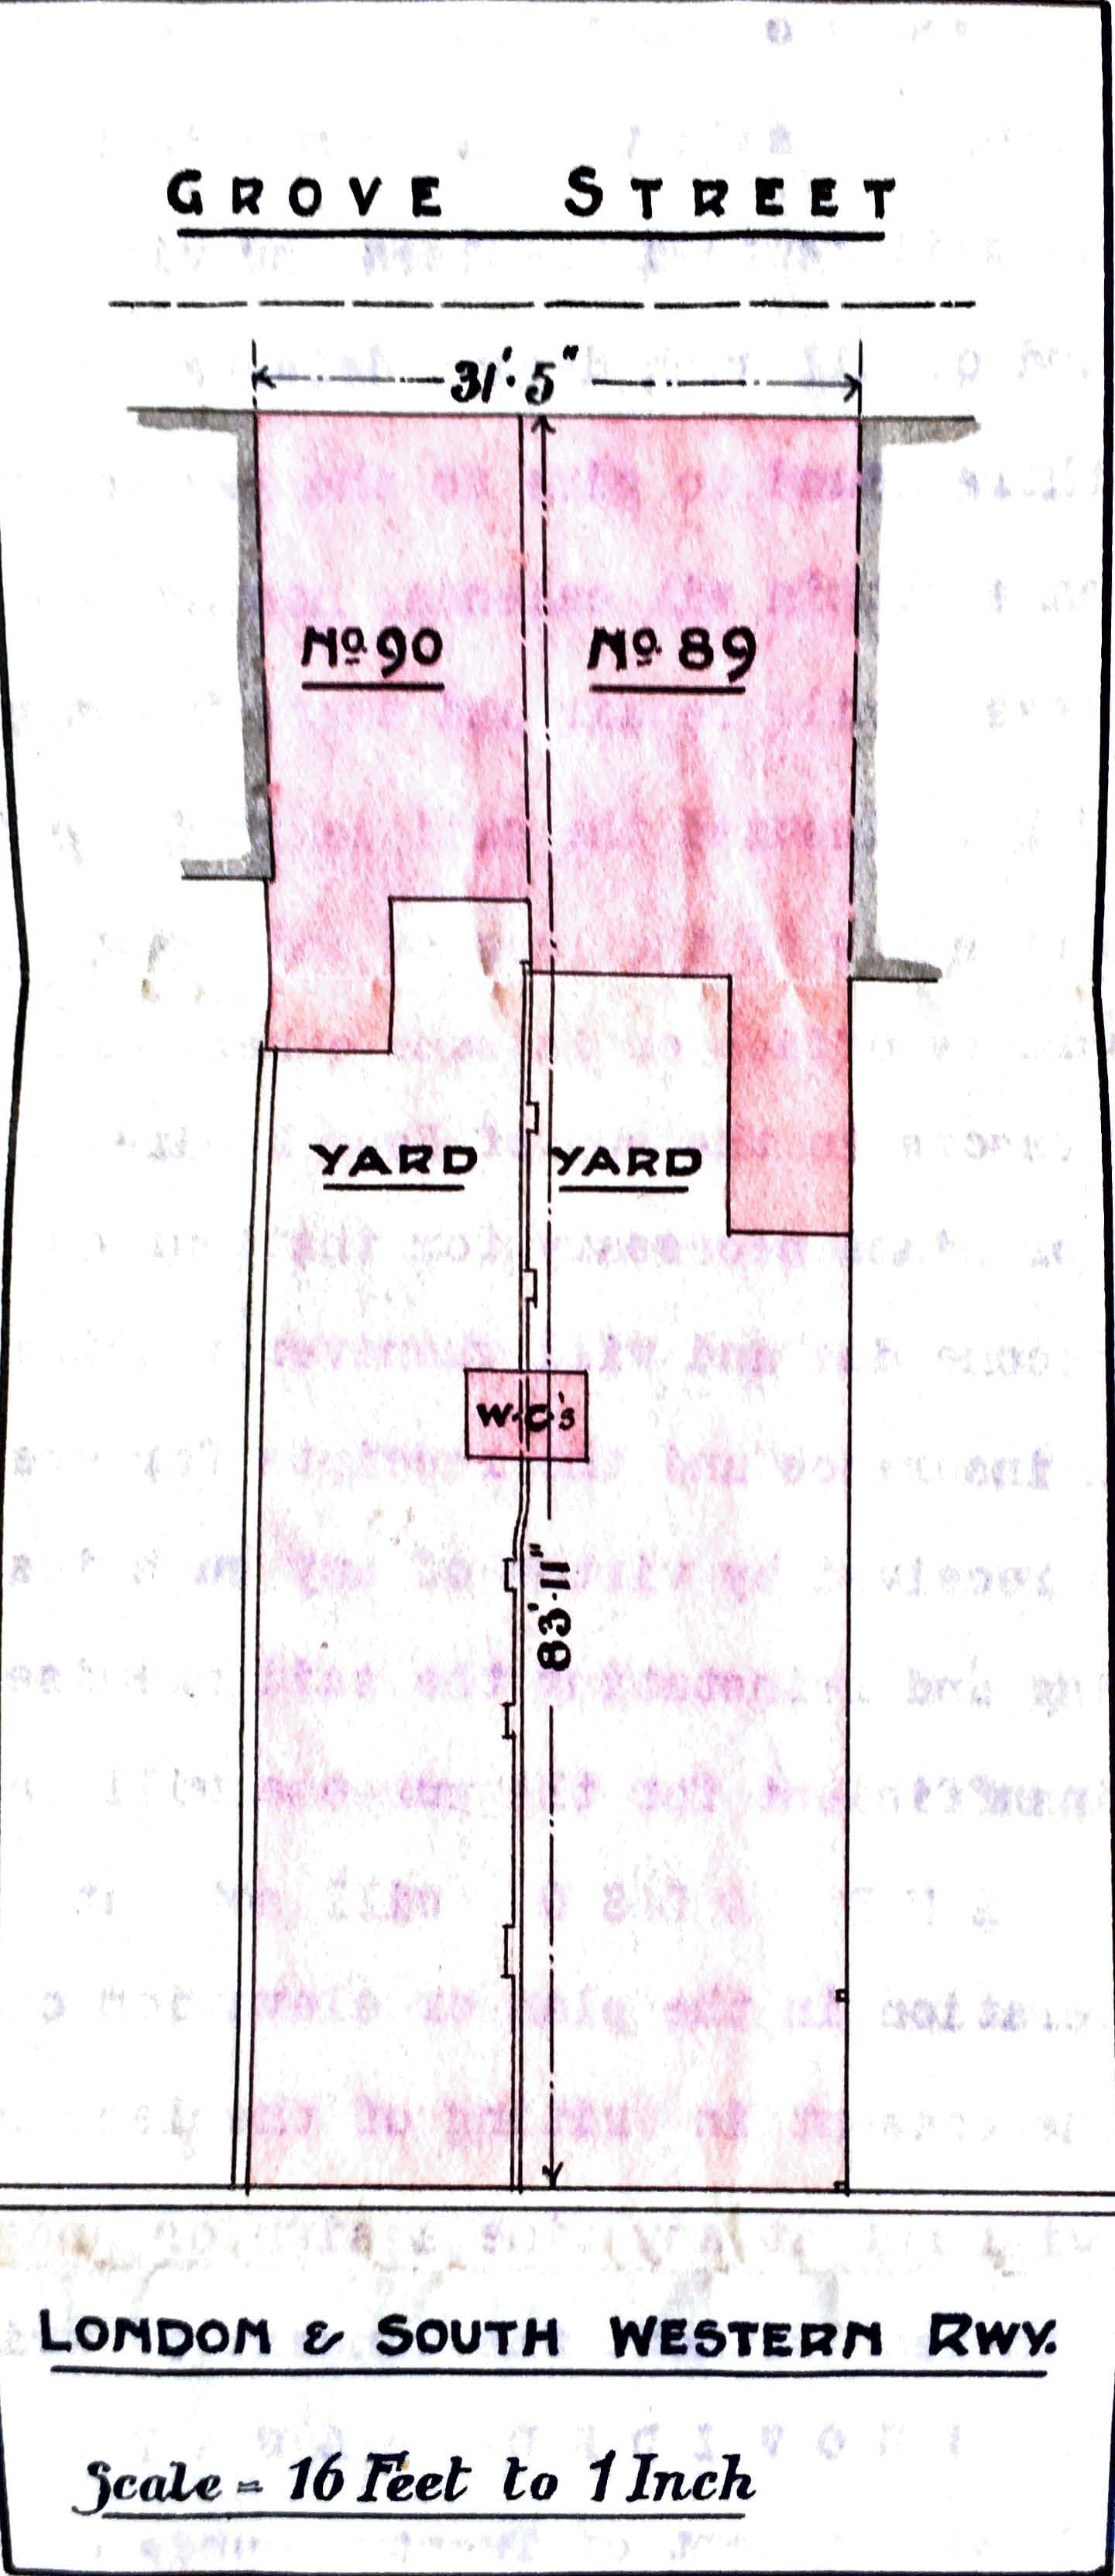 Lease 89 90 Grove Street 1906 Plan